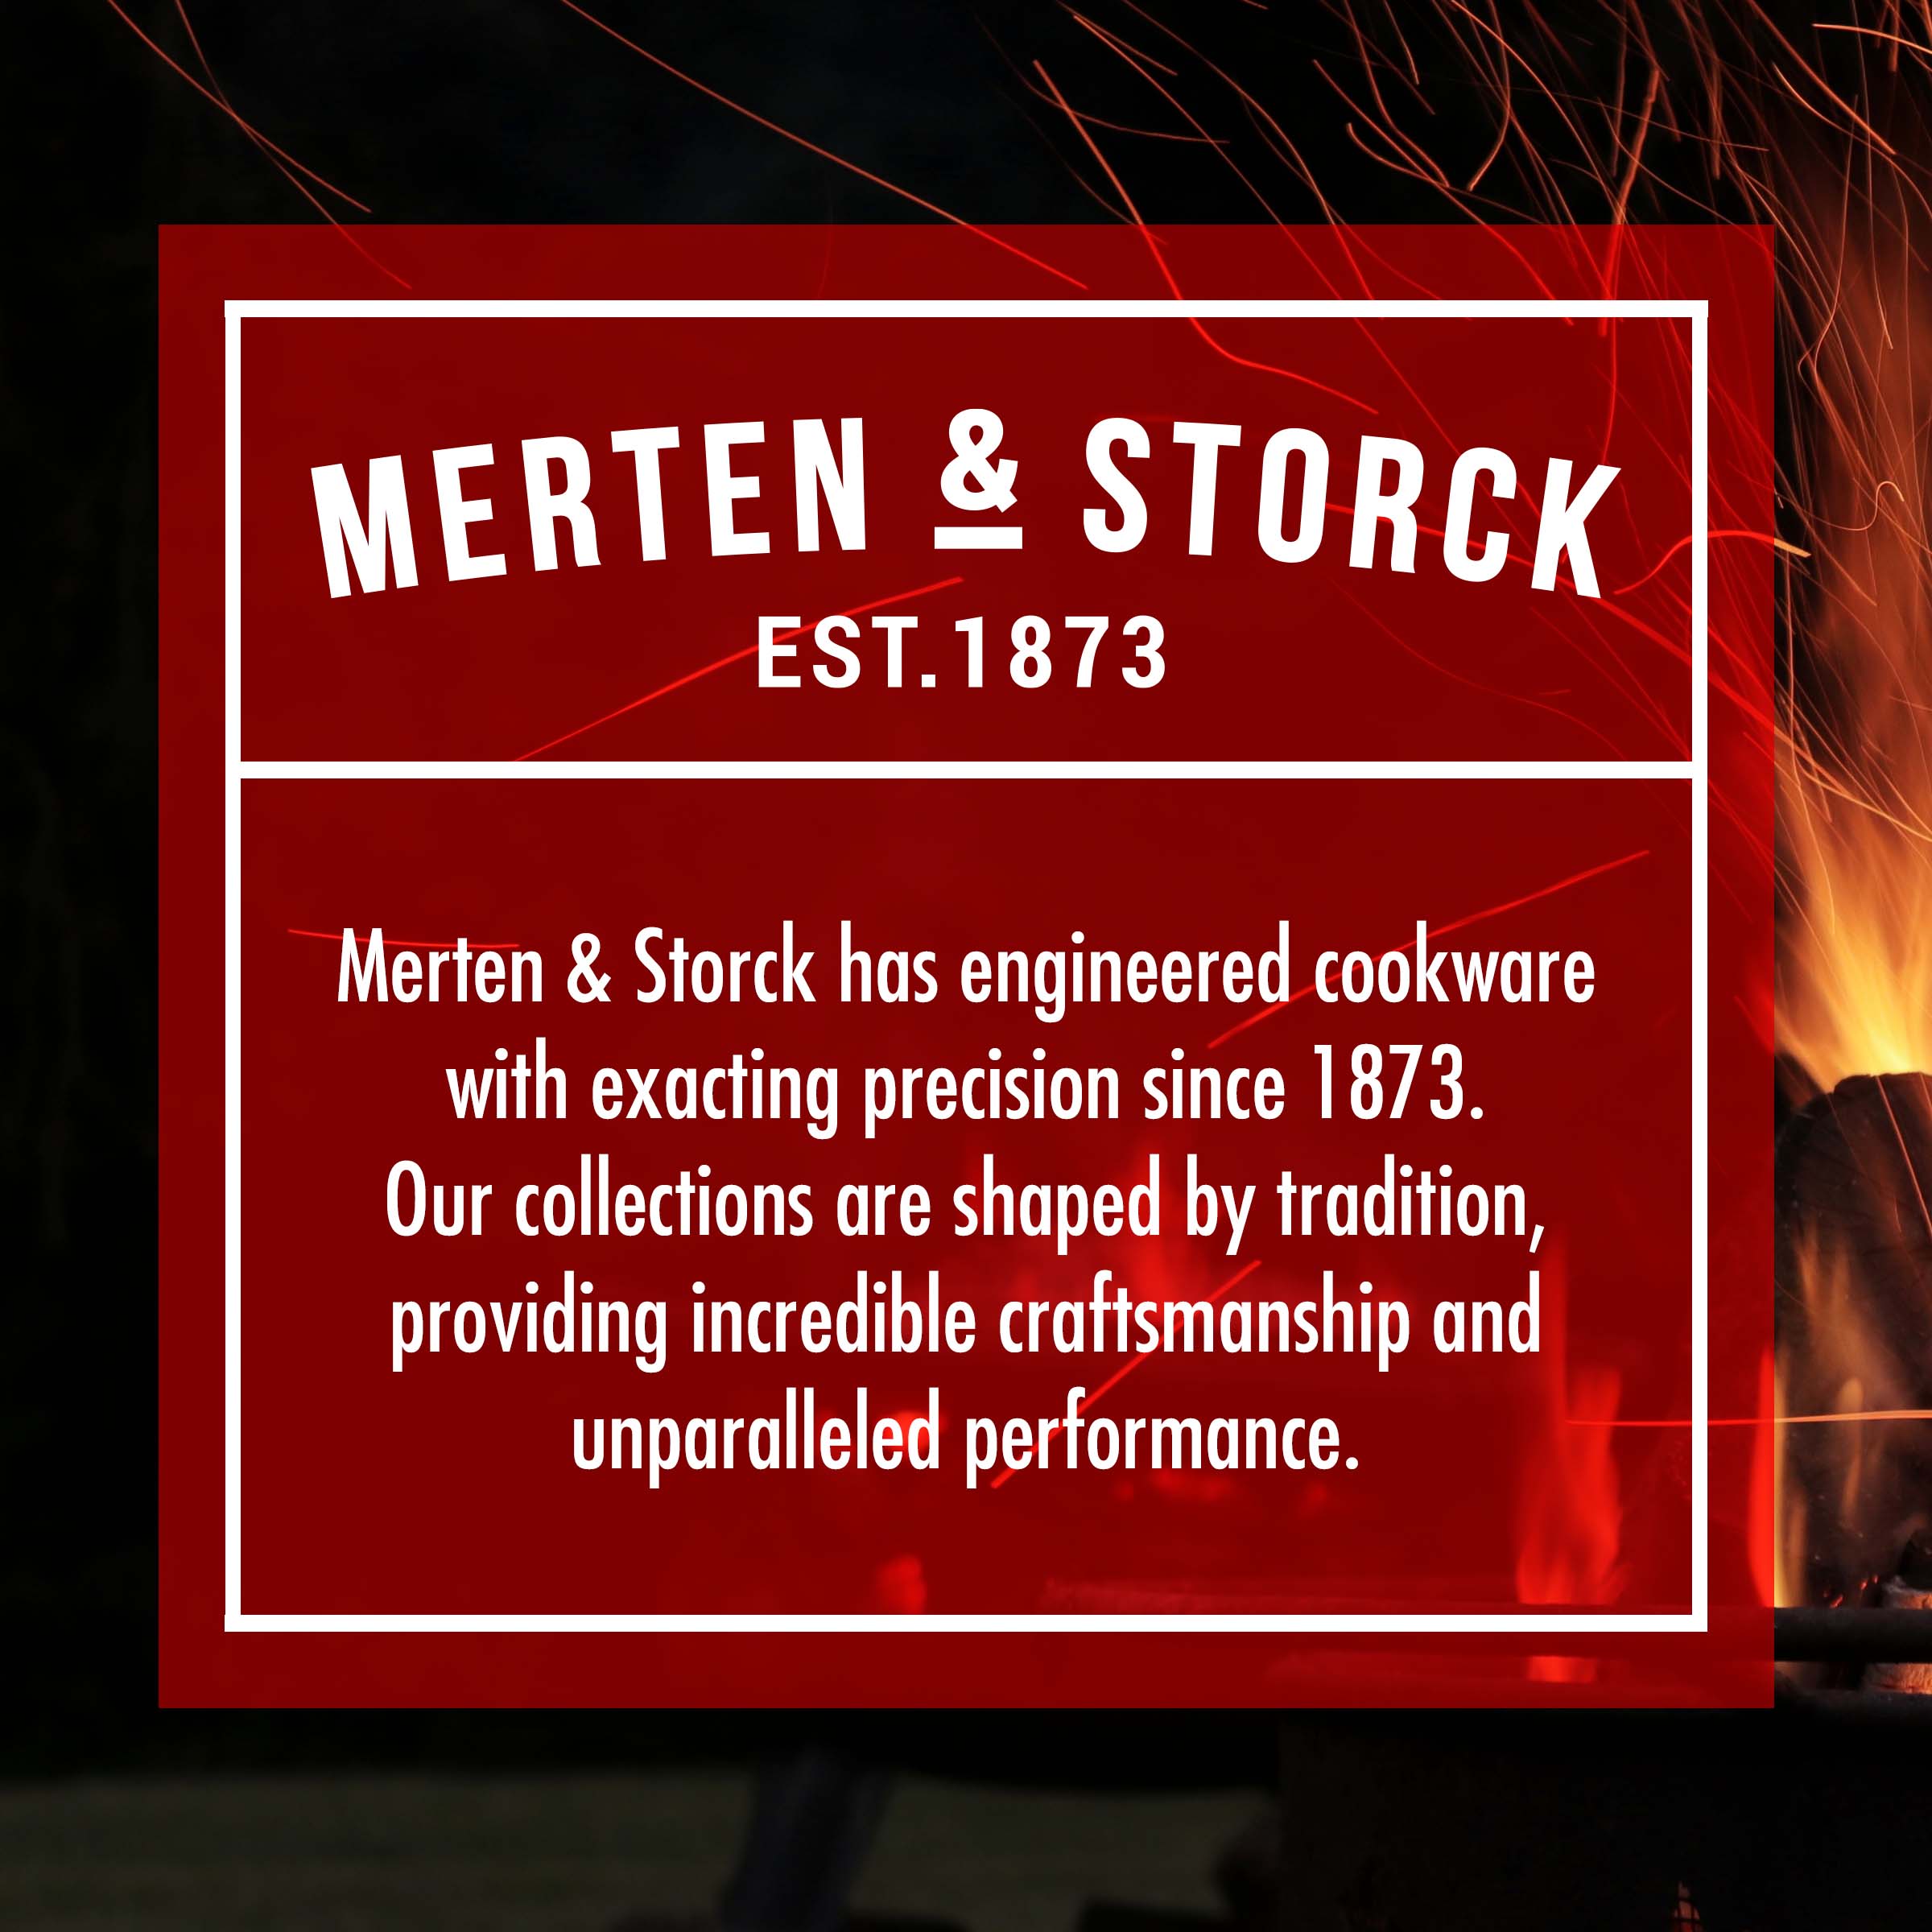 Merten & Storck Pre-Seasoned Carbon Steel Pro Induction 10" Frying Pan Skillet, Black - image 7 of 7